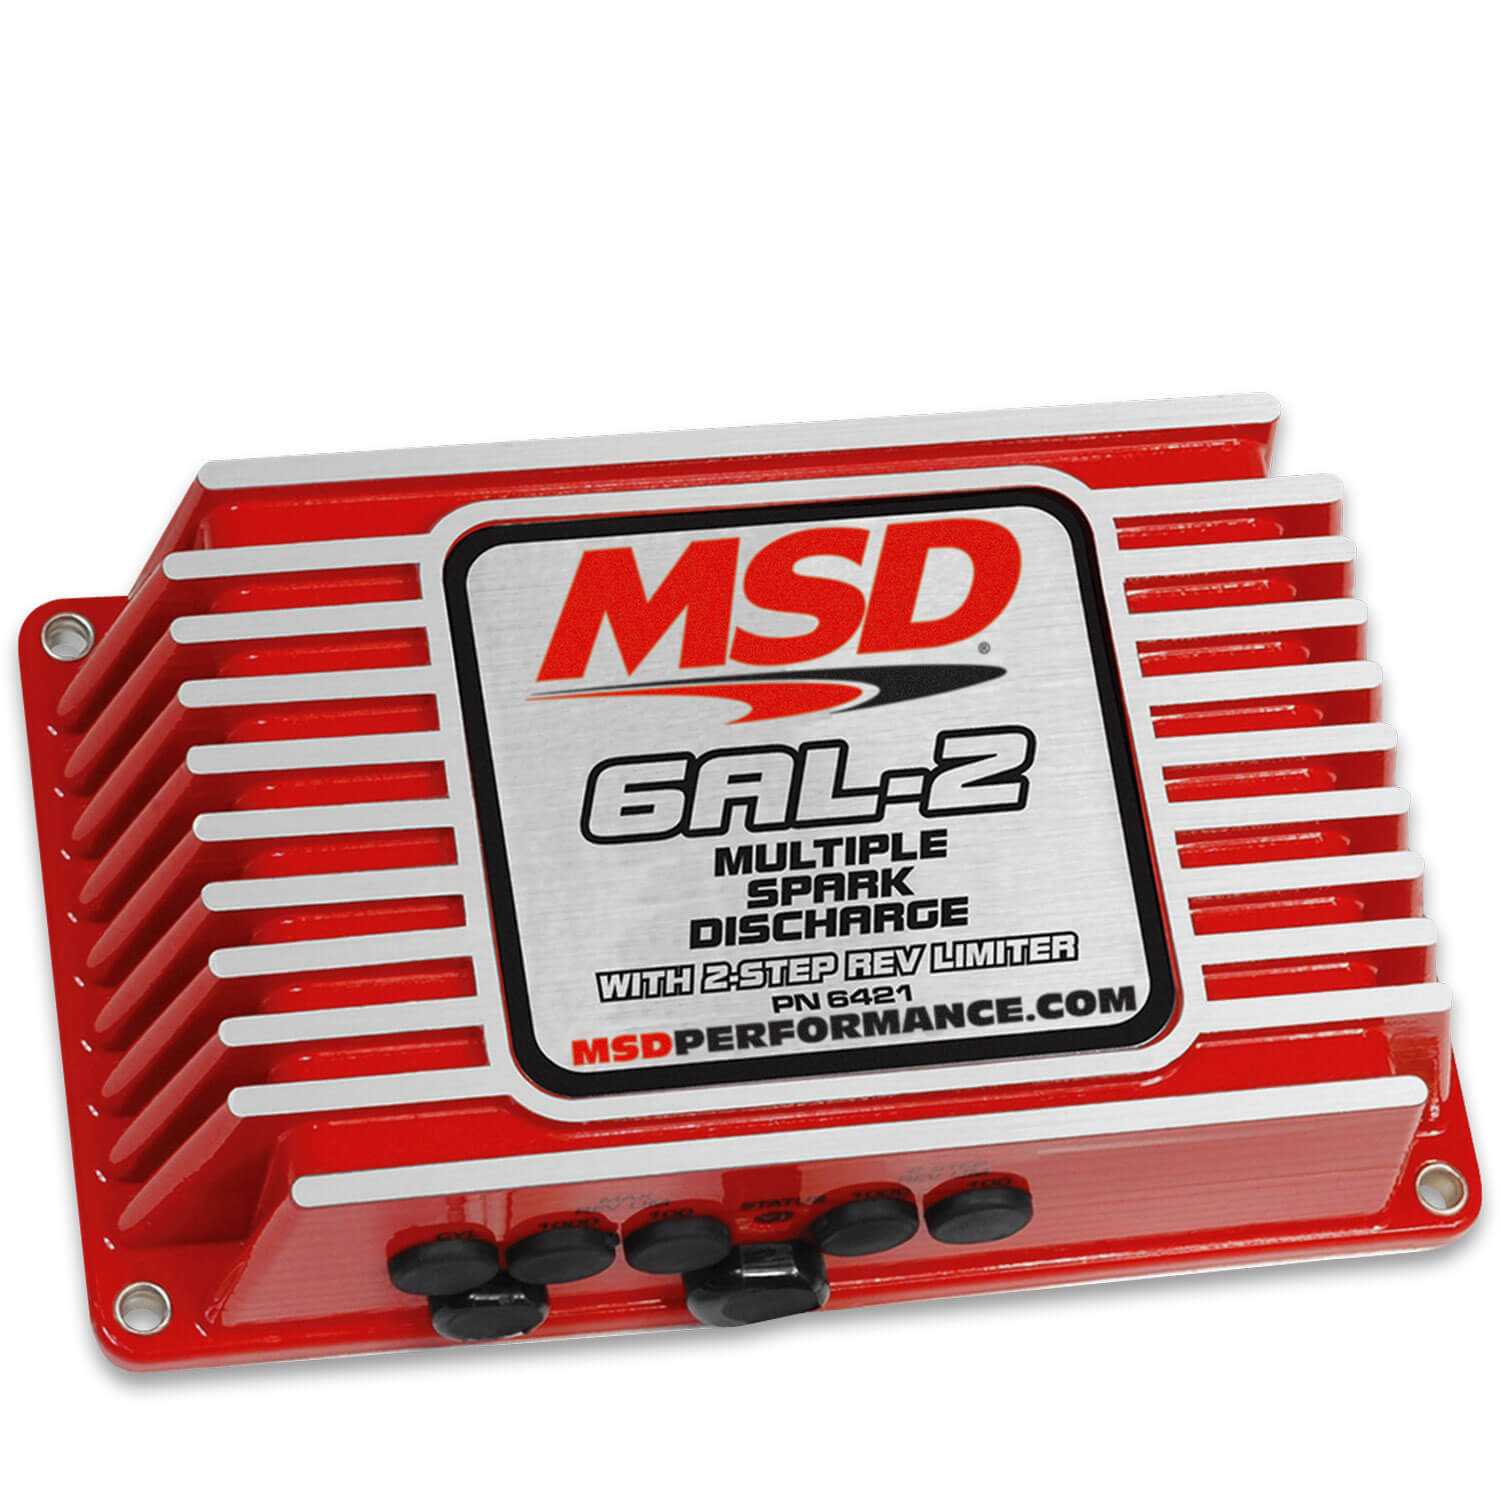 MSD 6AL-2 Ignition Boxes 6421